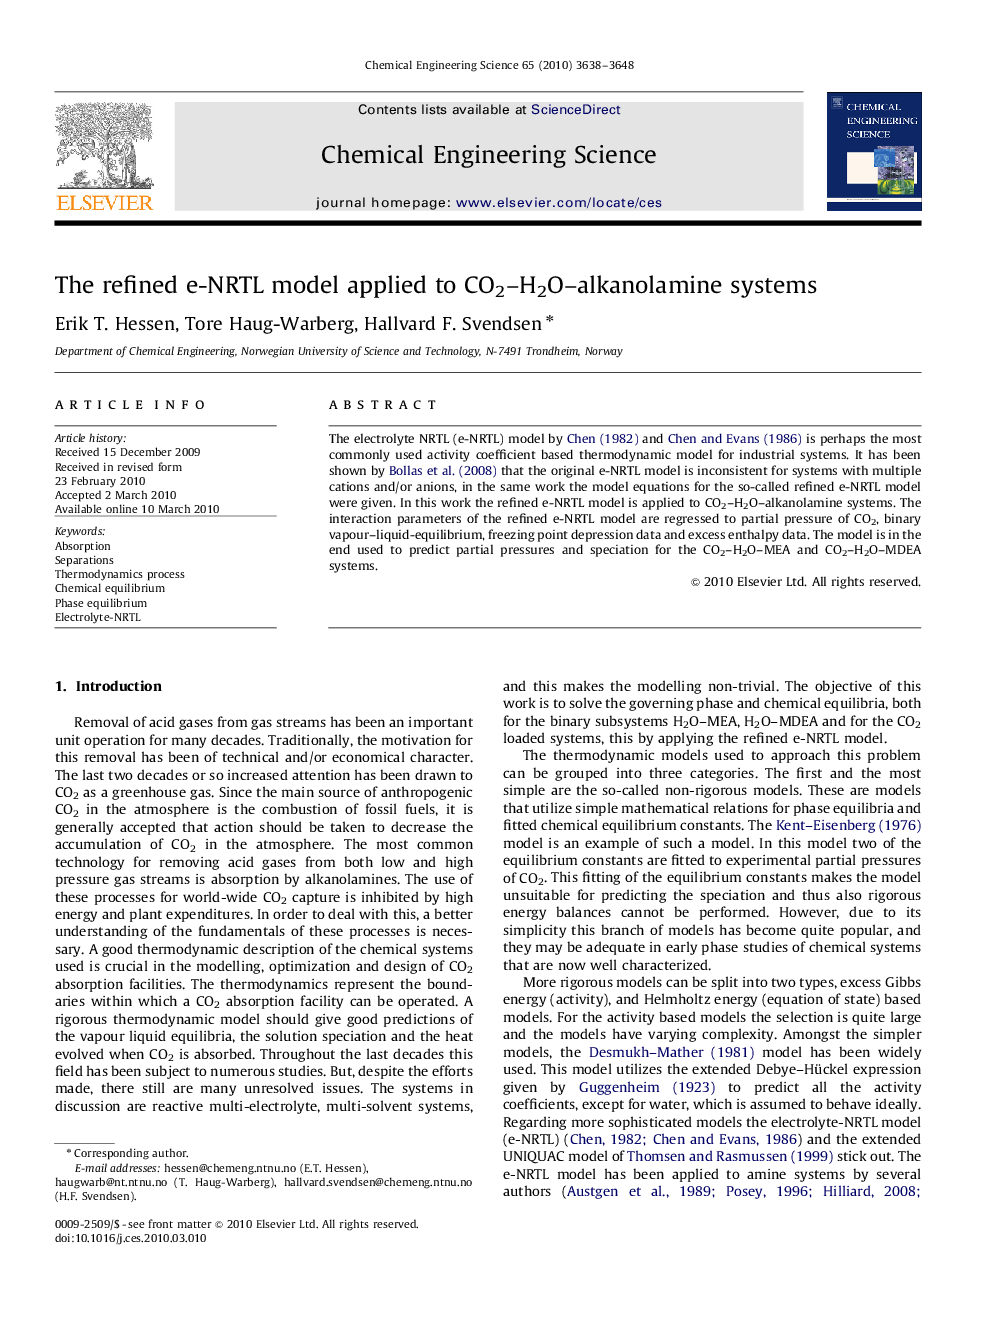 The refined e-NRTL model applied to CO2–H2O–alkanolamine systems